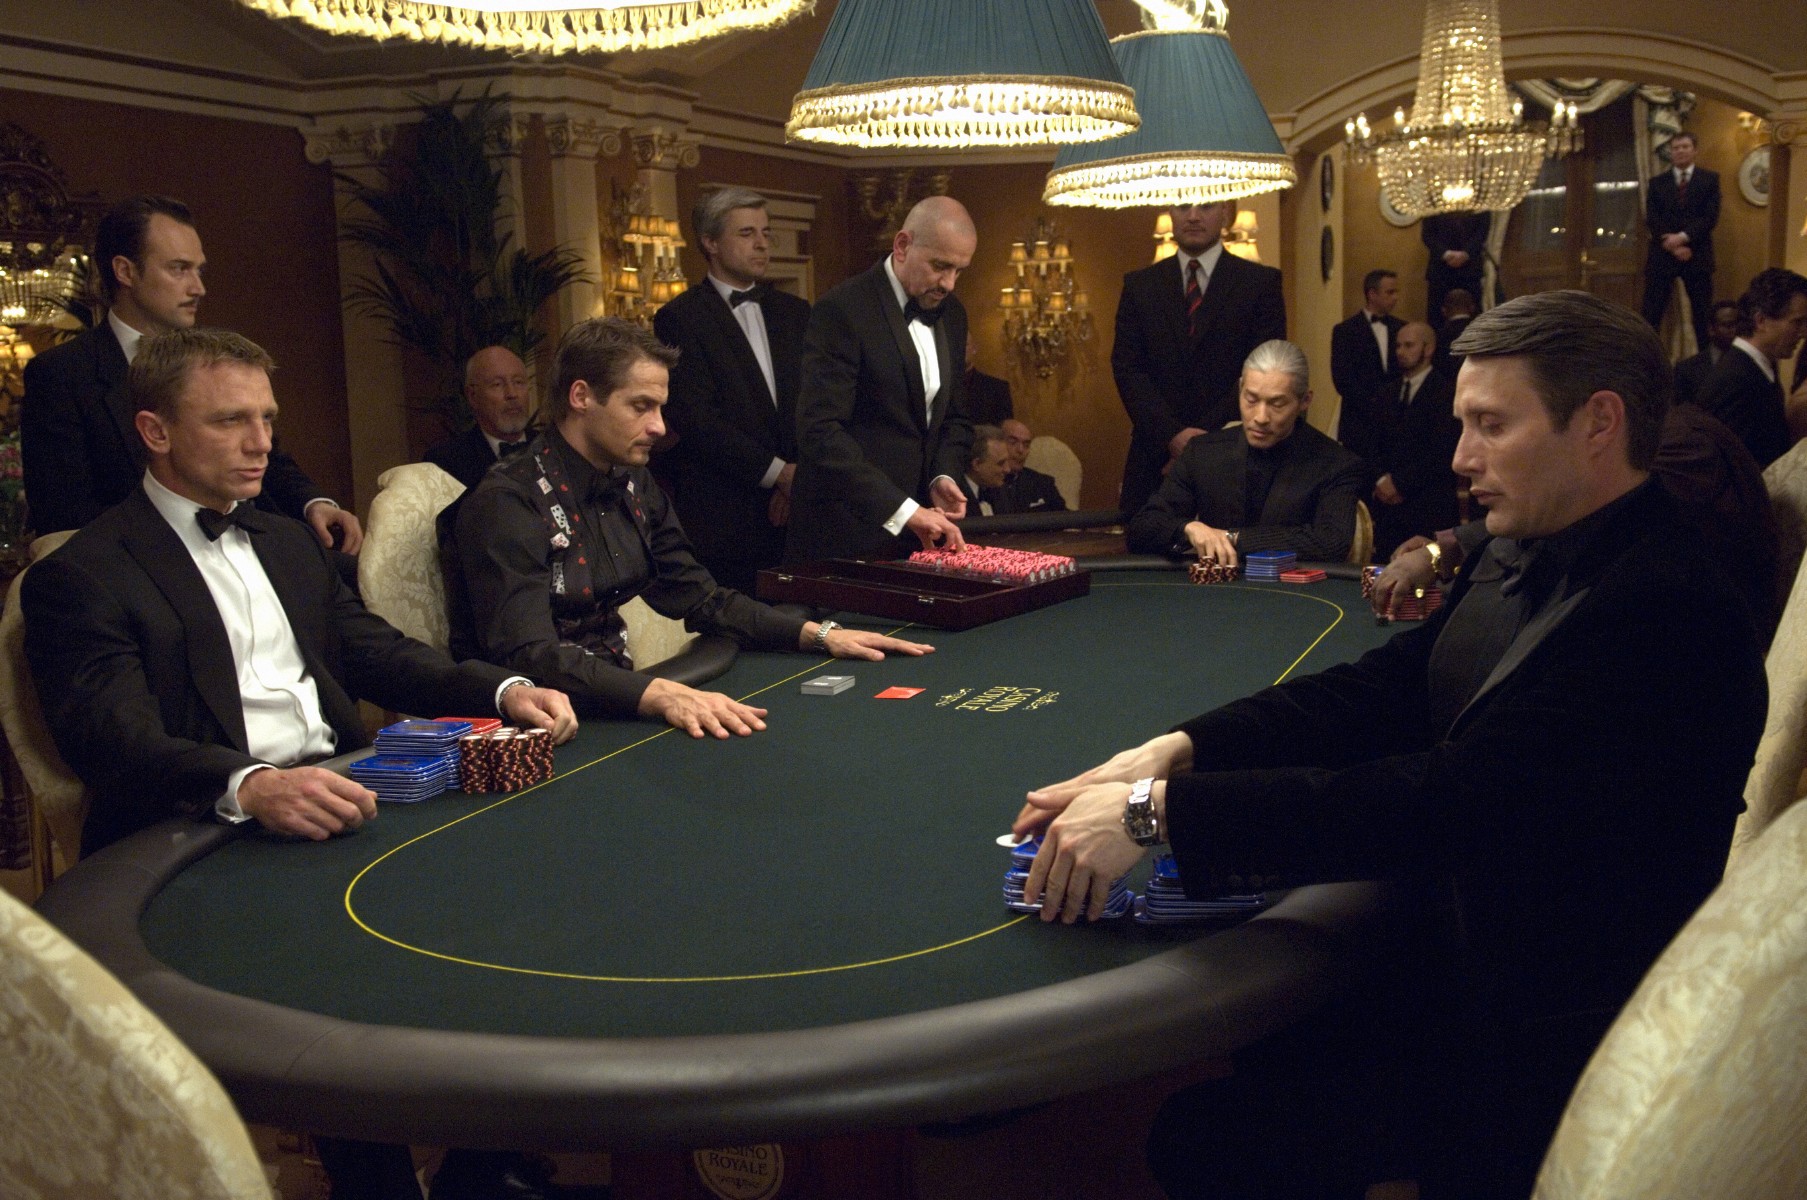 Casino royal париматч казино онлайн